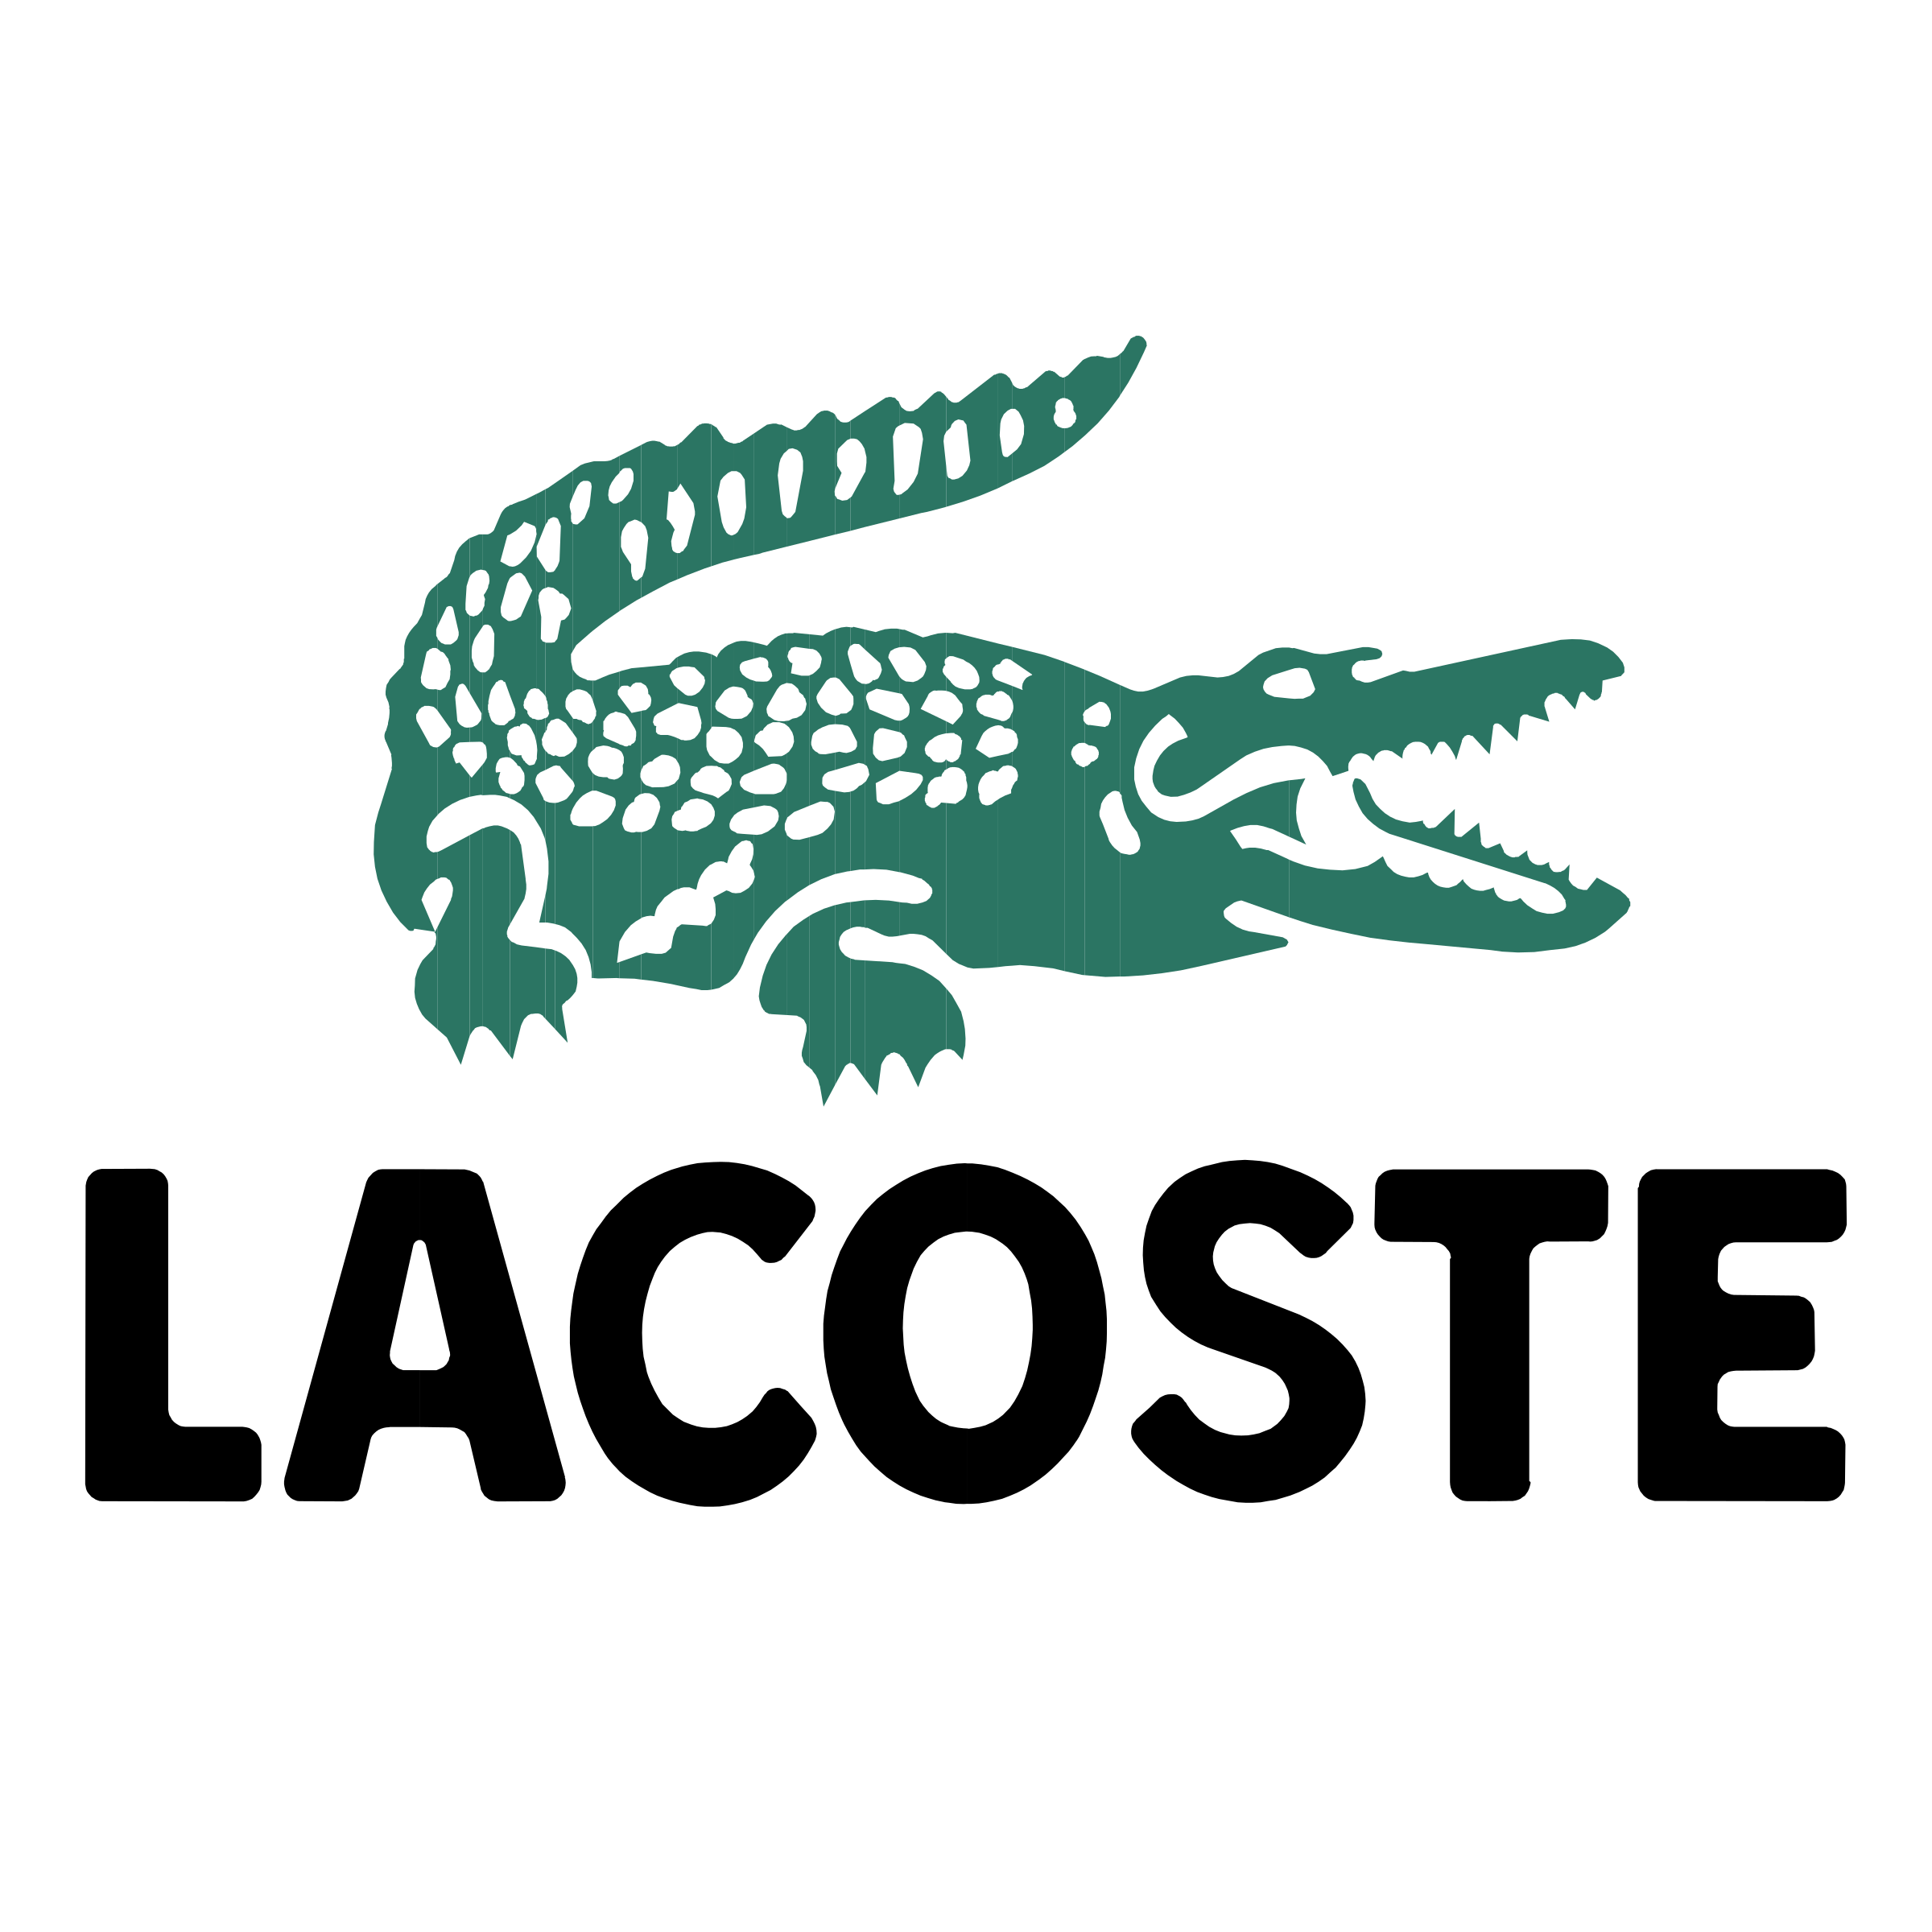 Lacoste Logo Transparent Image